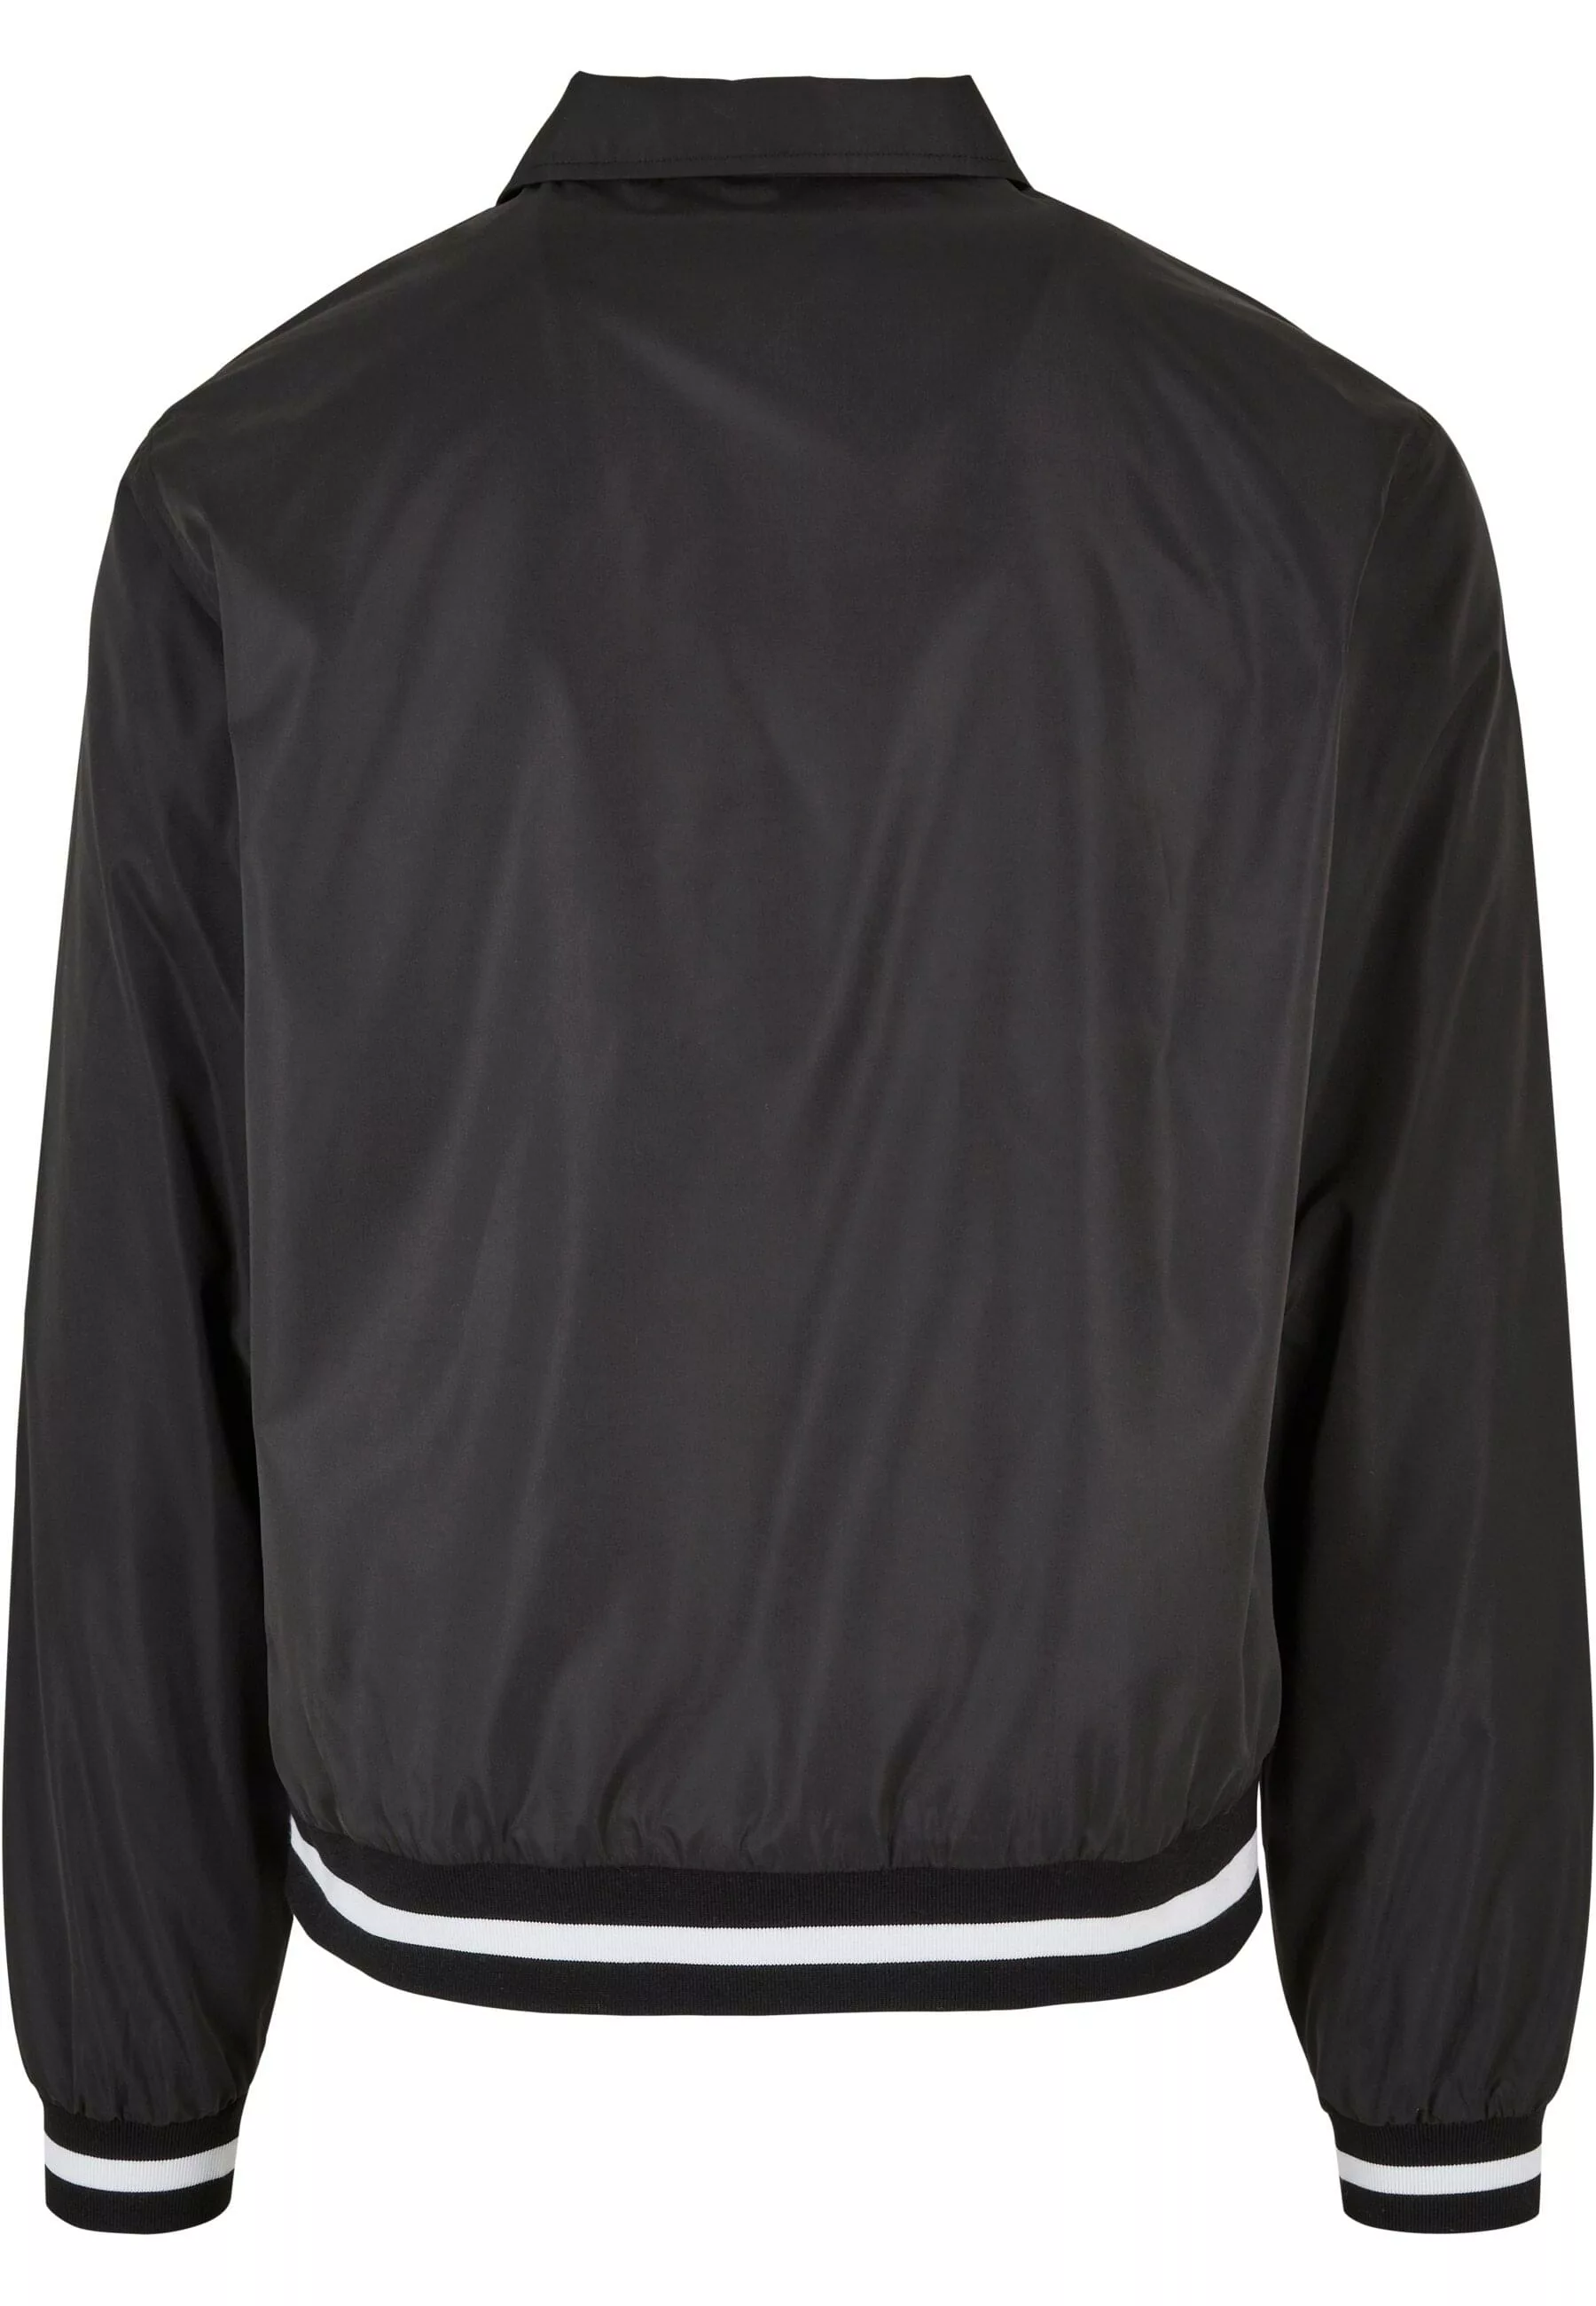 URBAN CLASSICS Collegejacke "Urban Classics Herren Sports College Jacket", günstig online kaufen